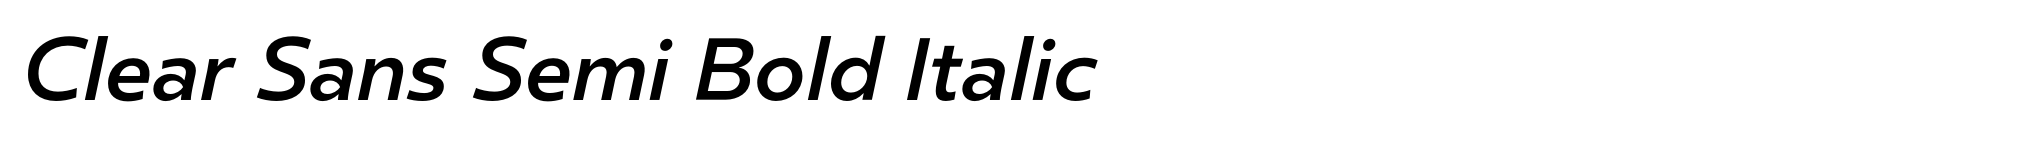 Clear Sans Semi Bold Italic image